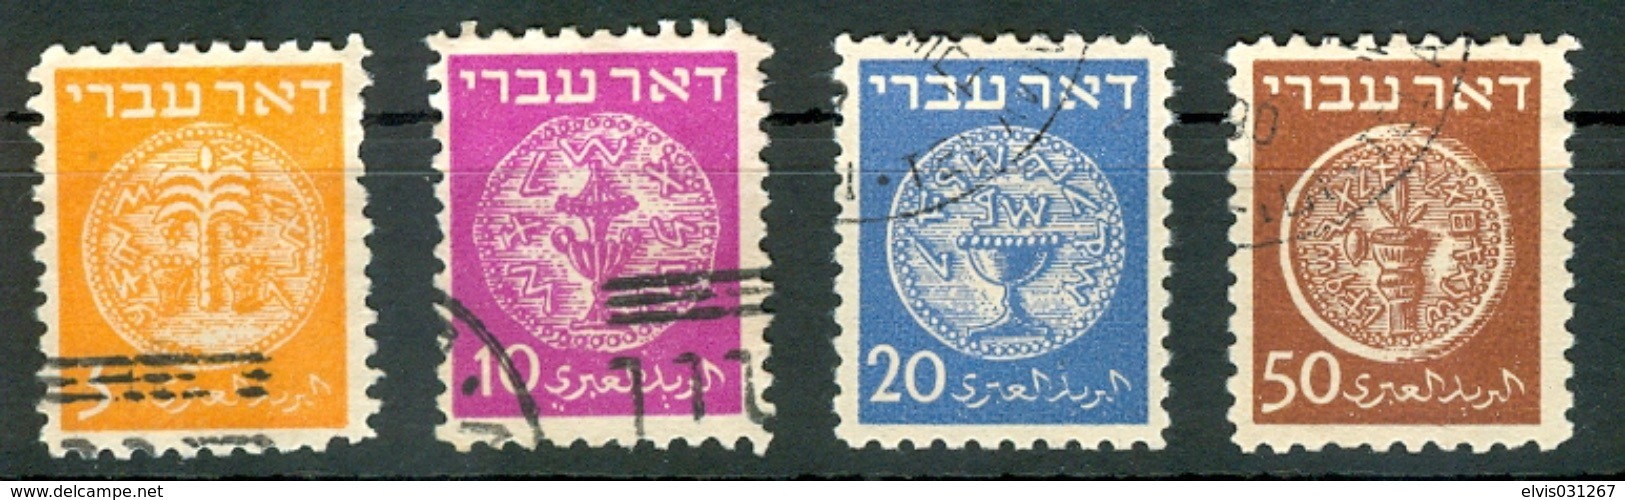 Israel - 1948, Michel/Philex No. : 1-4, Perf: 10/11 !!! - DOAR IVRI - 1st Coins - USED - *** - No Tab - Ongebruikt (zonder Tabs)